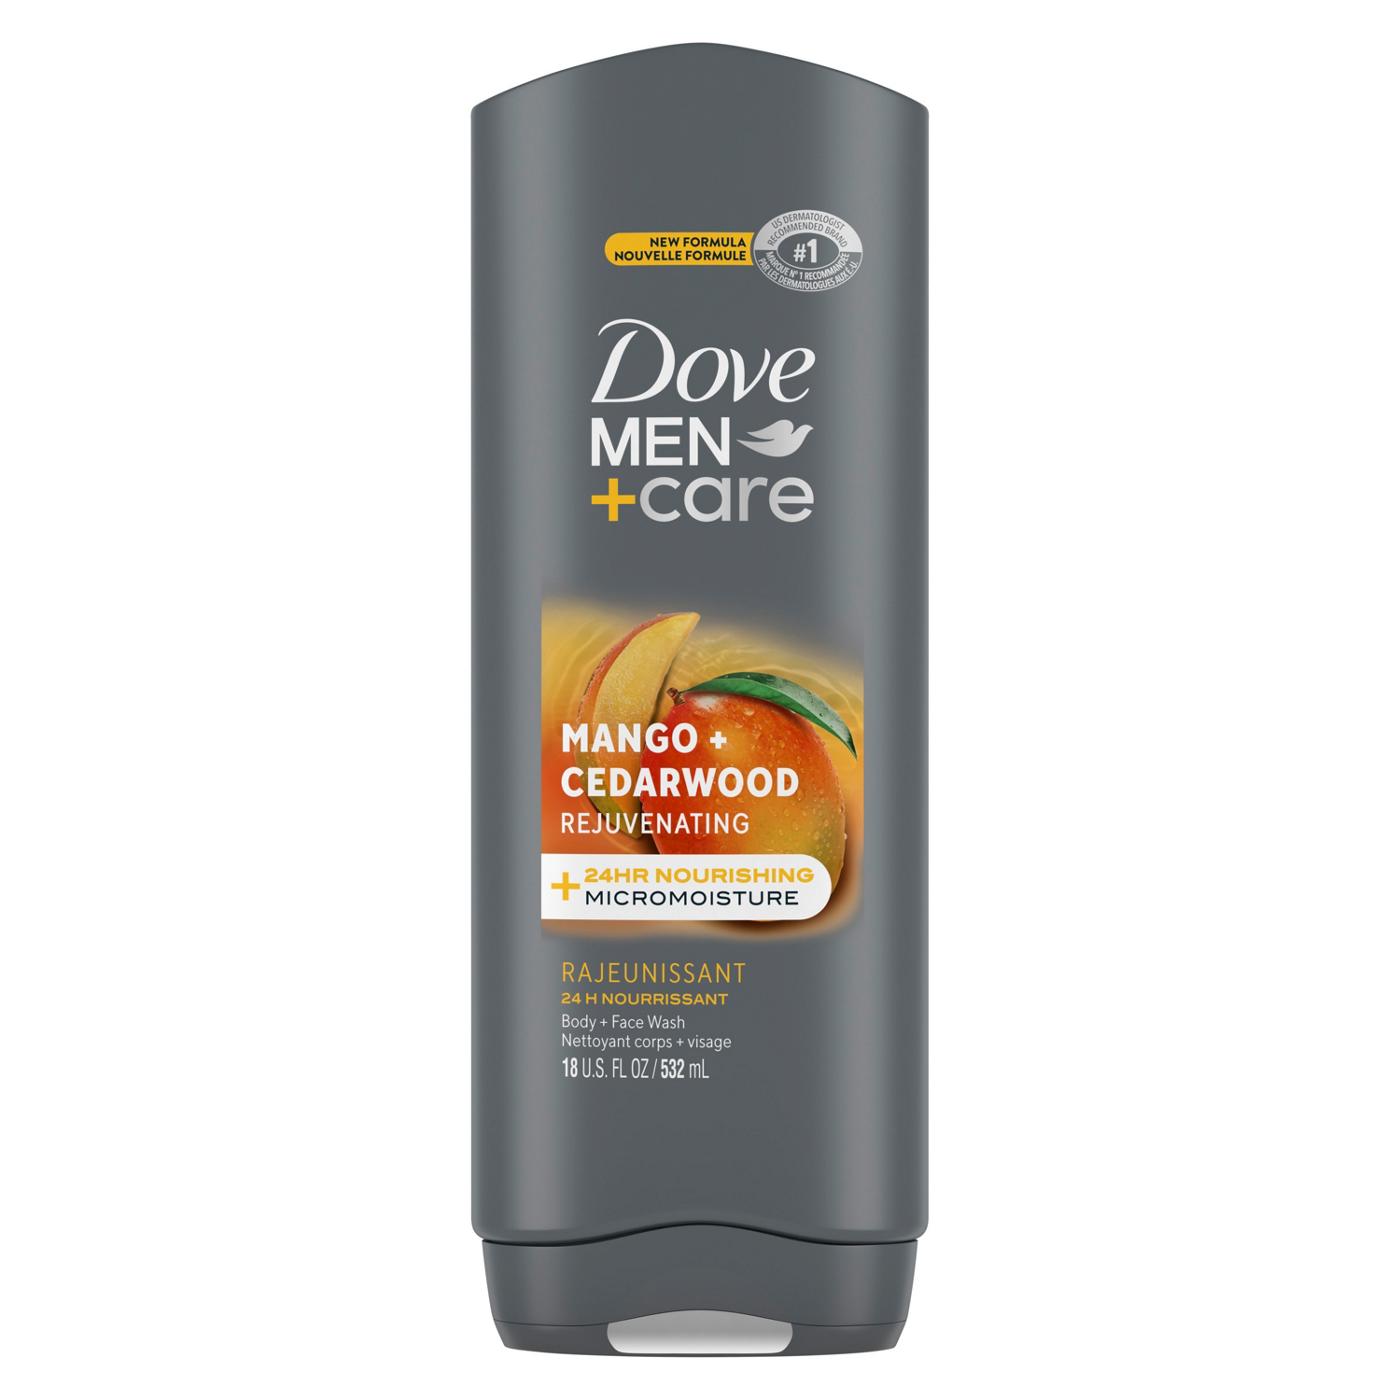 Dove Men+Care Rejuvenating Body Wash - Mango + Cedarwood ; image 1 of 2